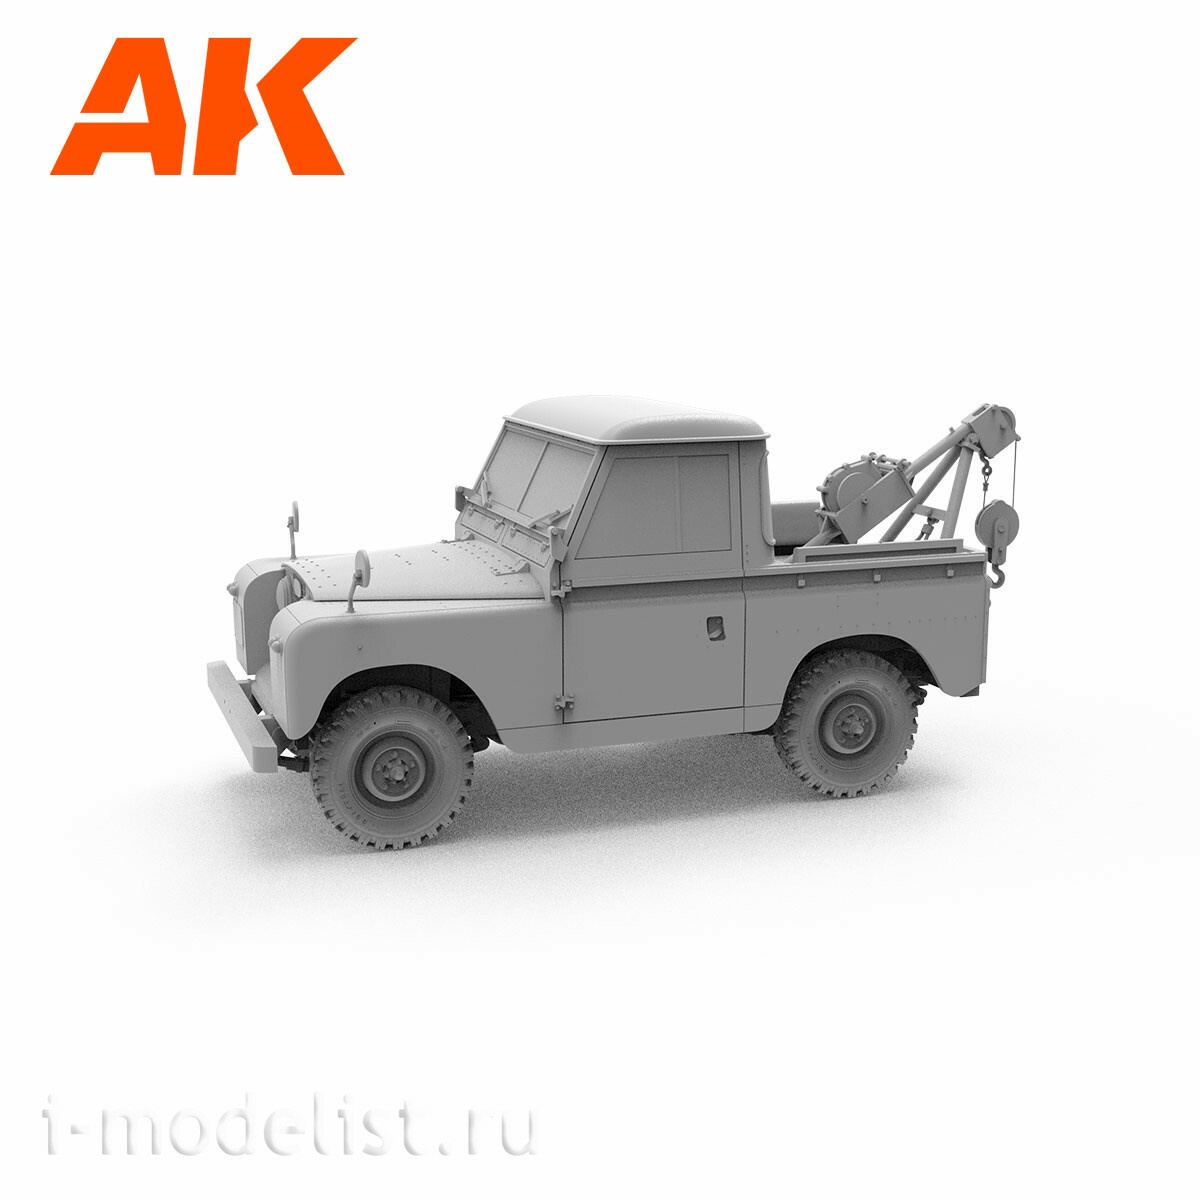 AK35014 AK Interactive 1/35 Внедорожник Land Rover 88 Series IIA Кран-эвакуатор